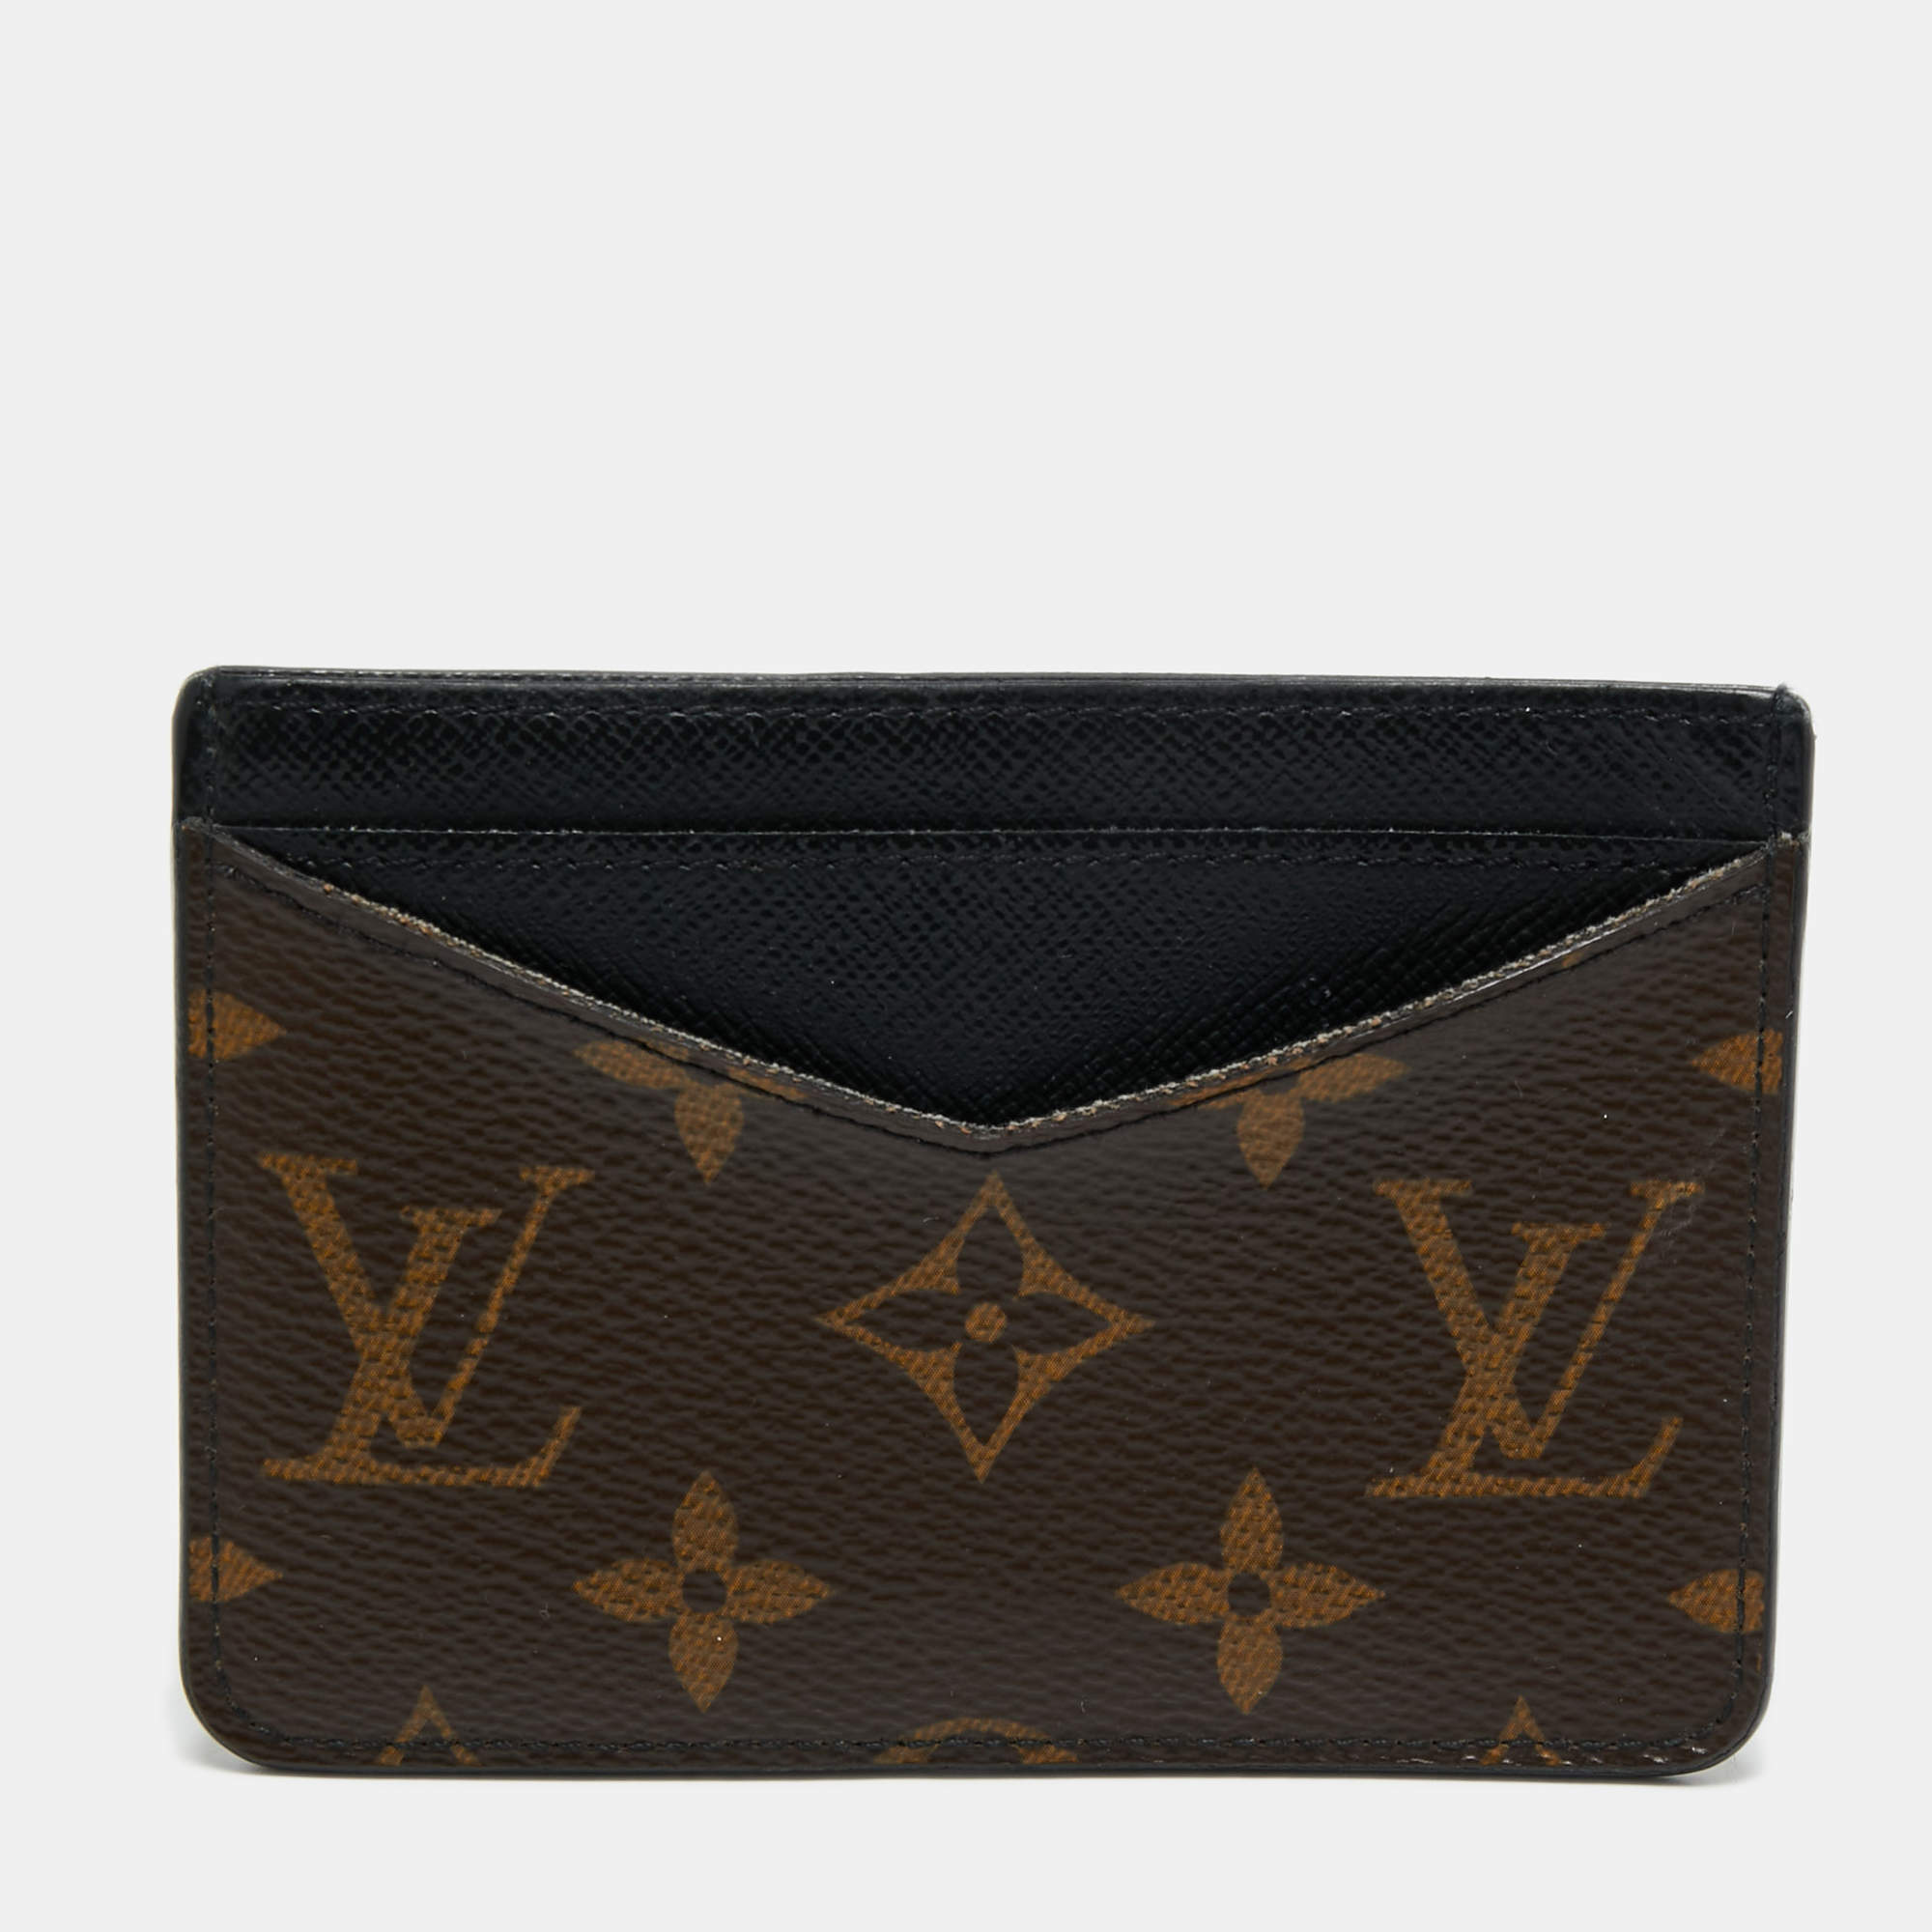 Gorgeous Authentic Louis Vuitton Monogram Black Macassar